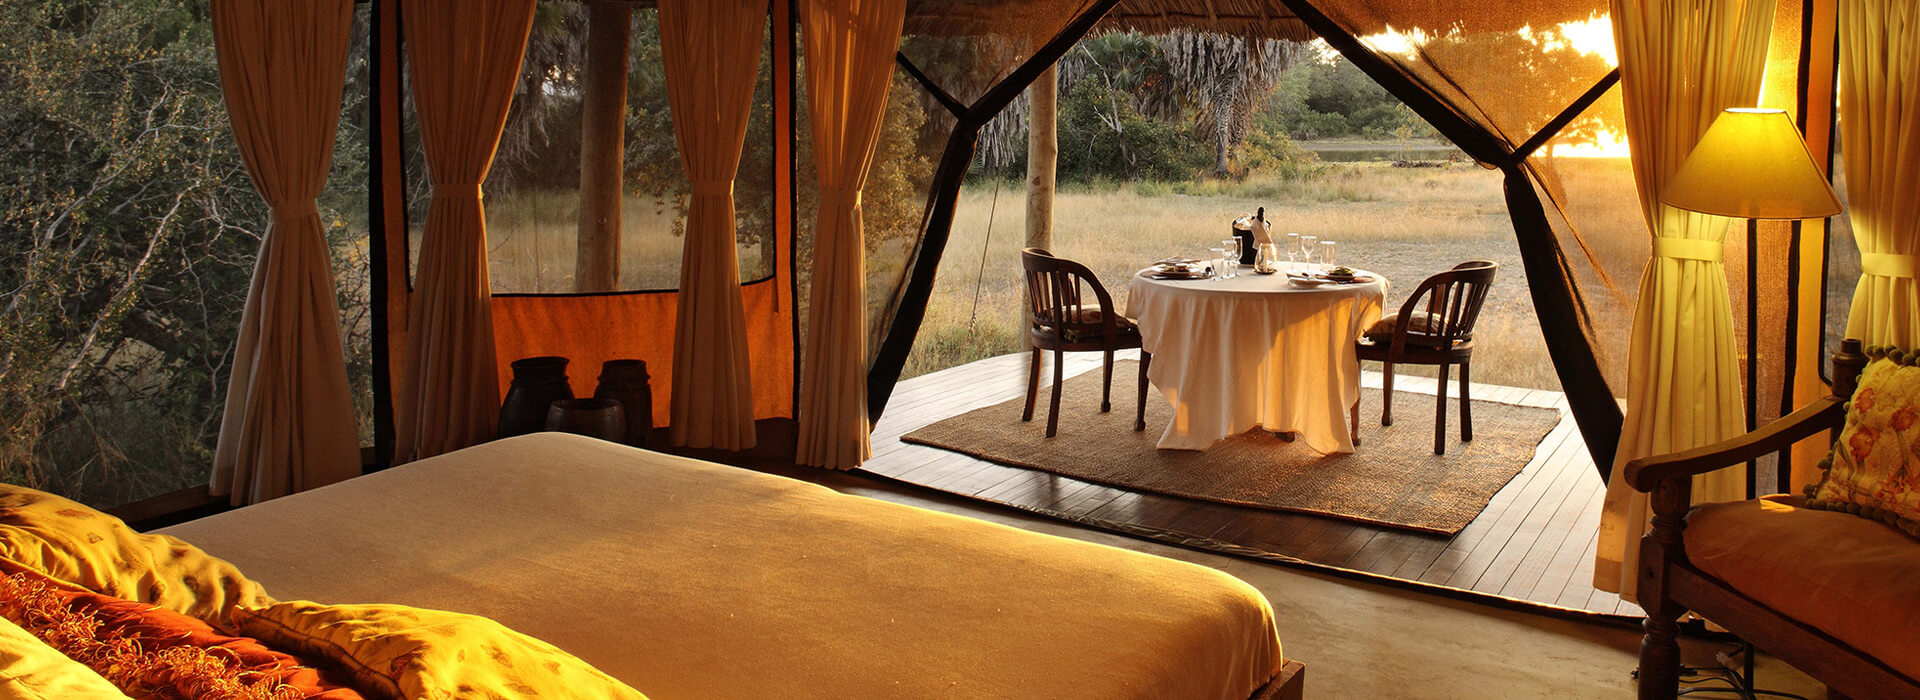 Safari Accommodation in East Africa